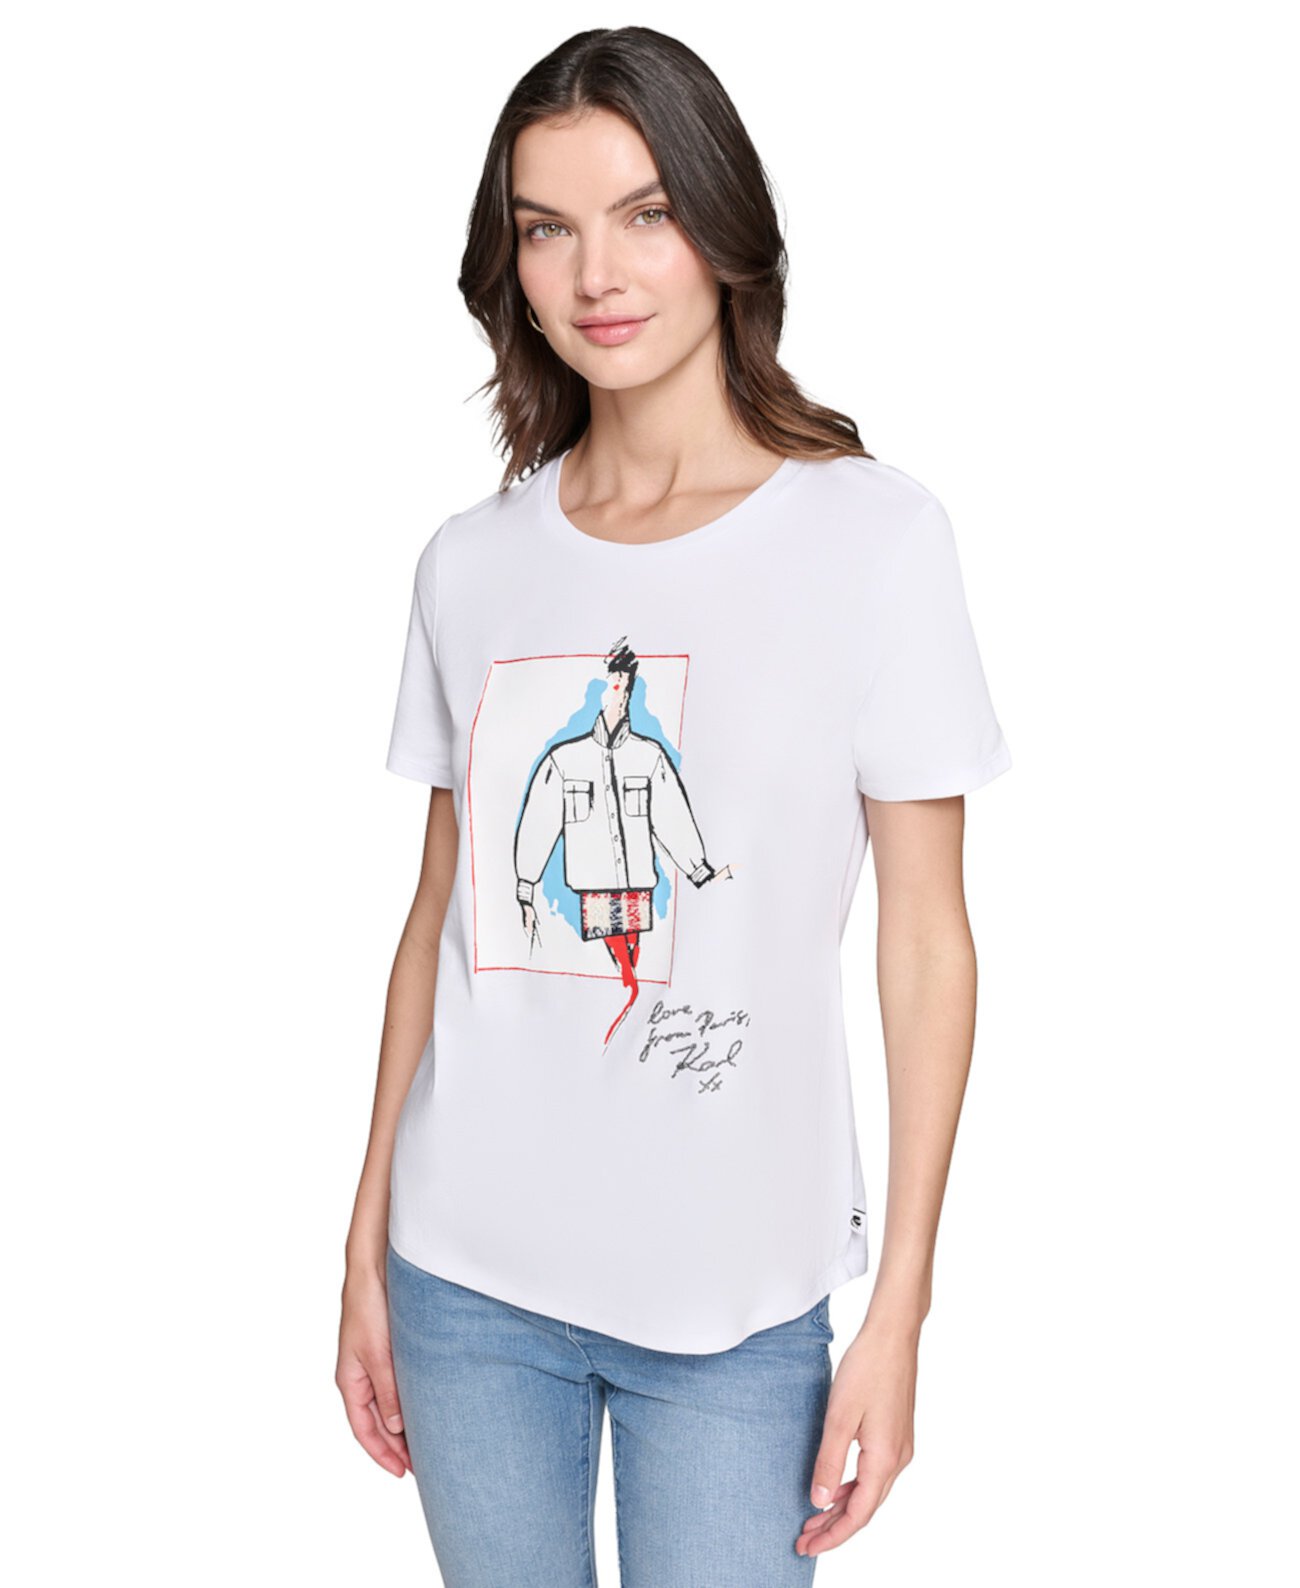 Women's Sketch Girl Graphic T-Shirt Karl Lagerfeld Paris